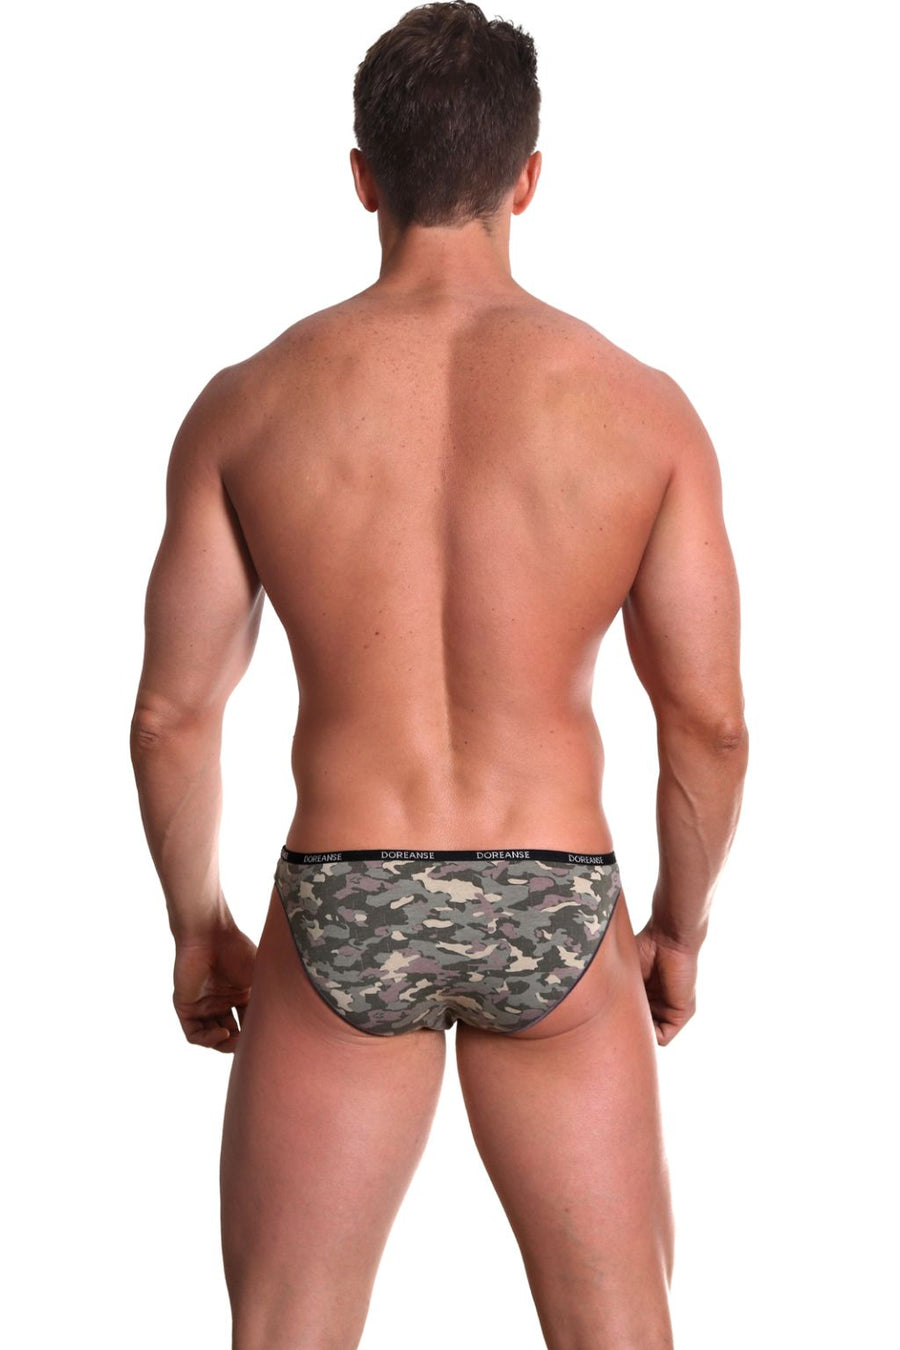 Doreanse Mens Lowrise Camouflage Bikini Brief Underwear